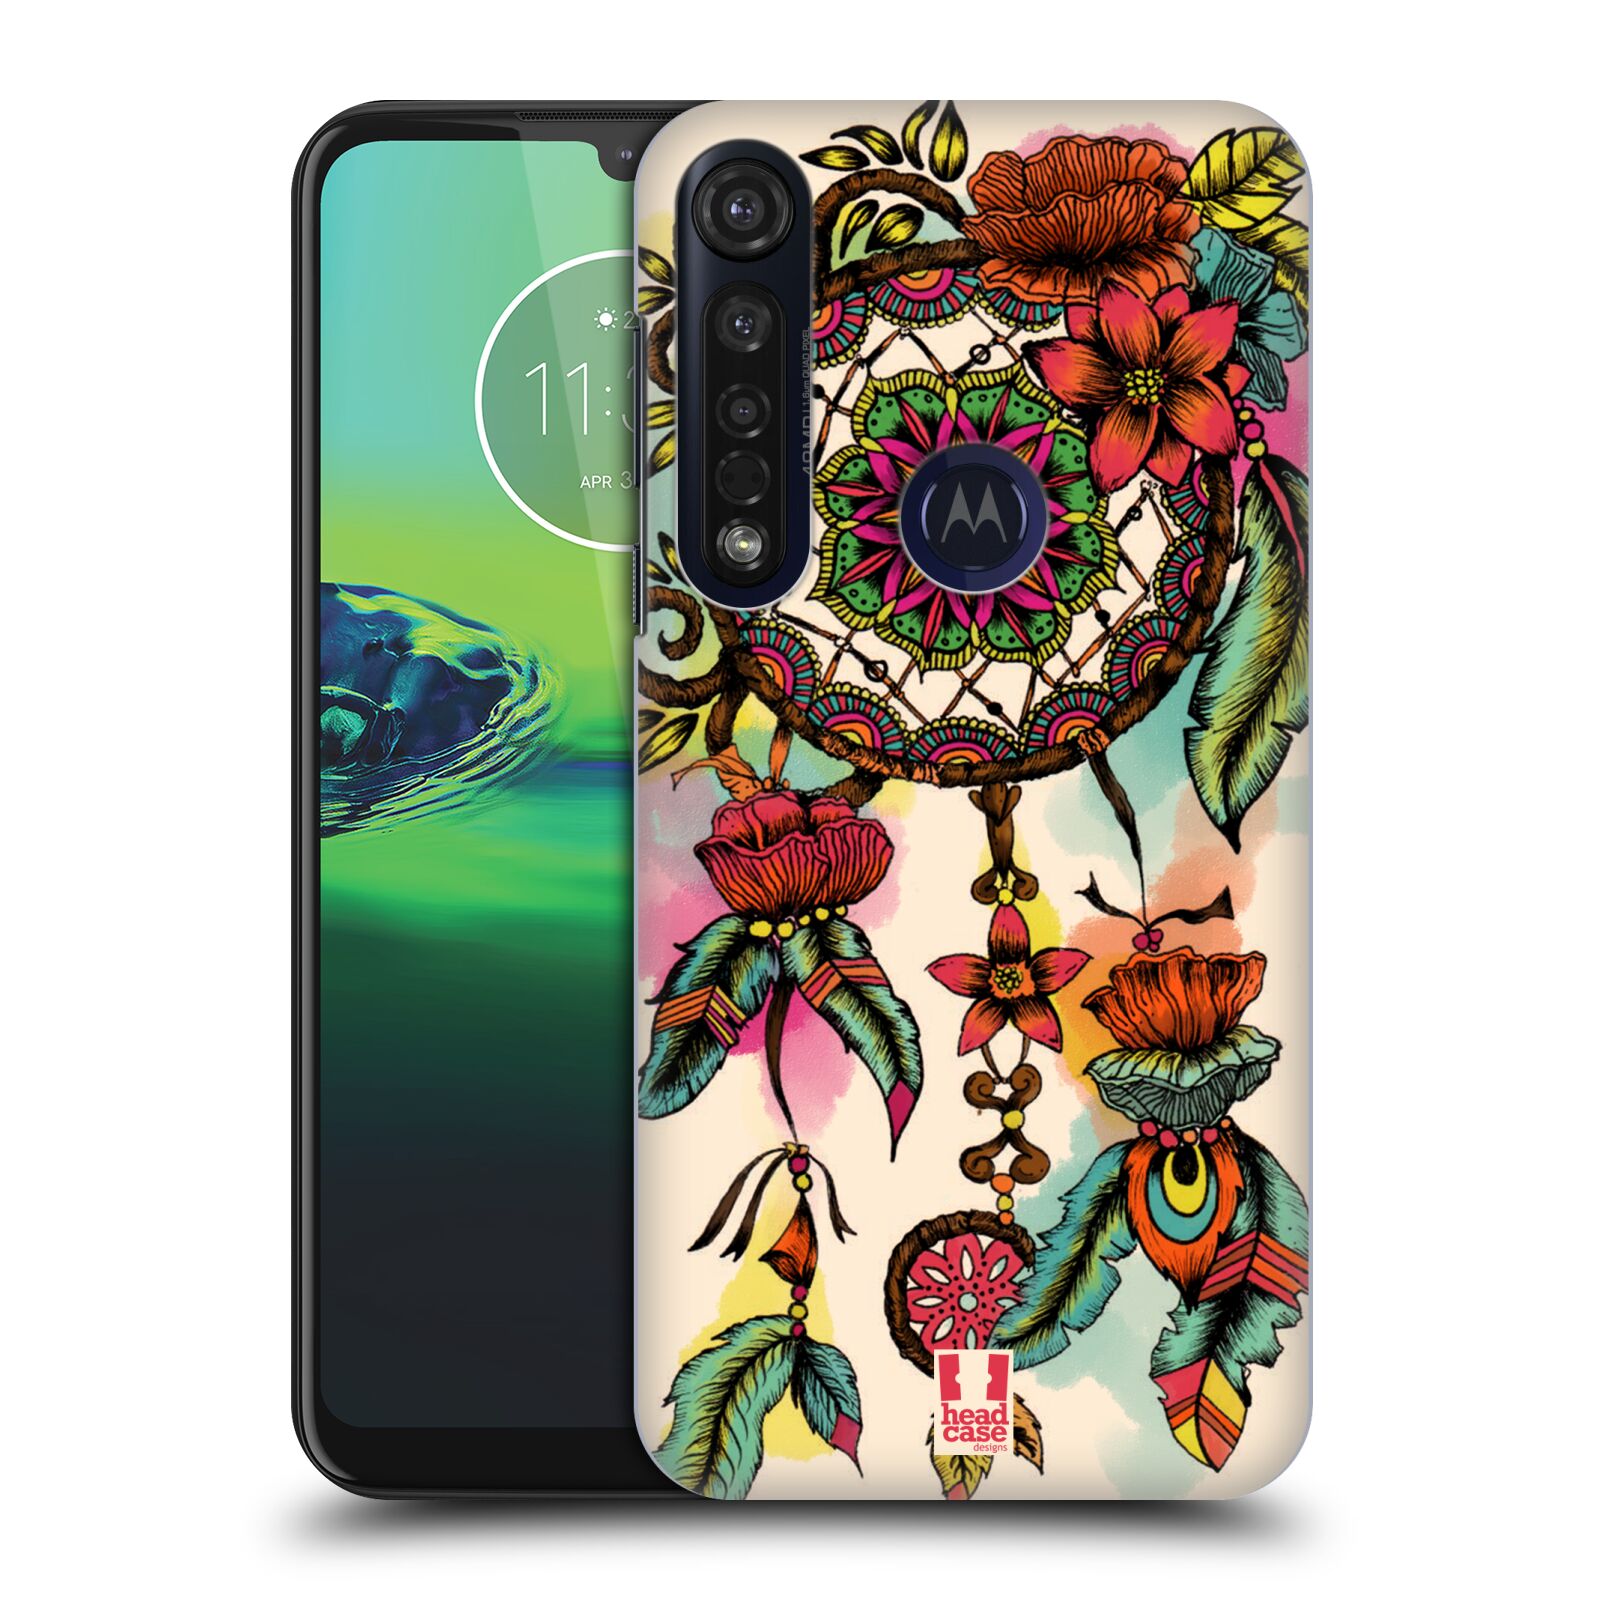 Pouzdro na mobil Motorola Moto G8 PLUS - HEAD CASE - vzor Květy lapač snů FLORID